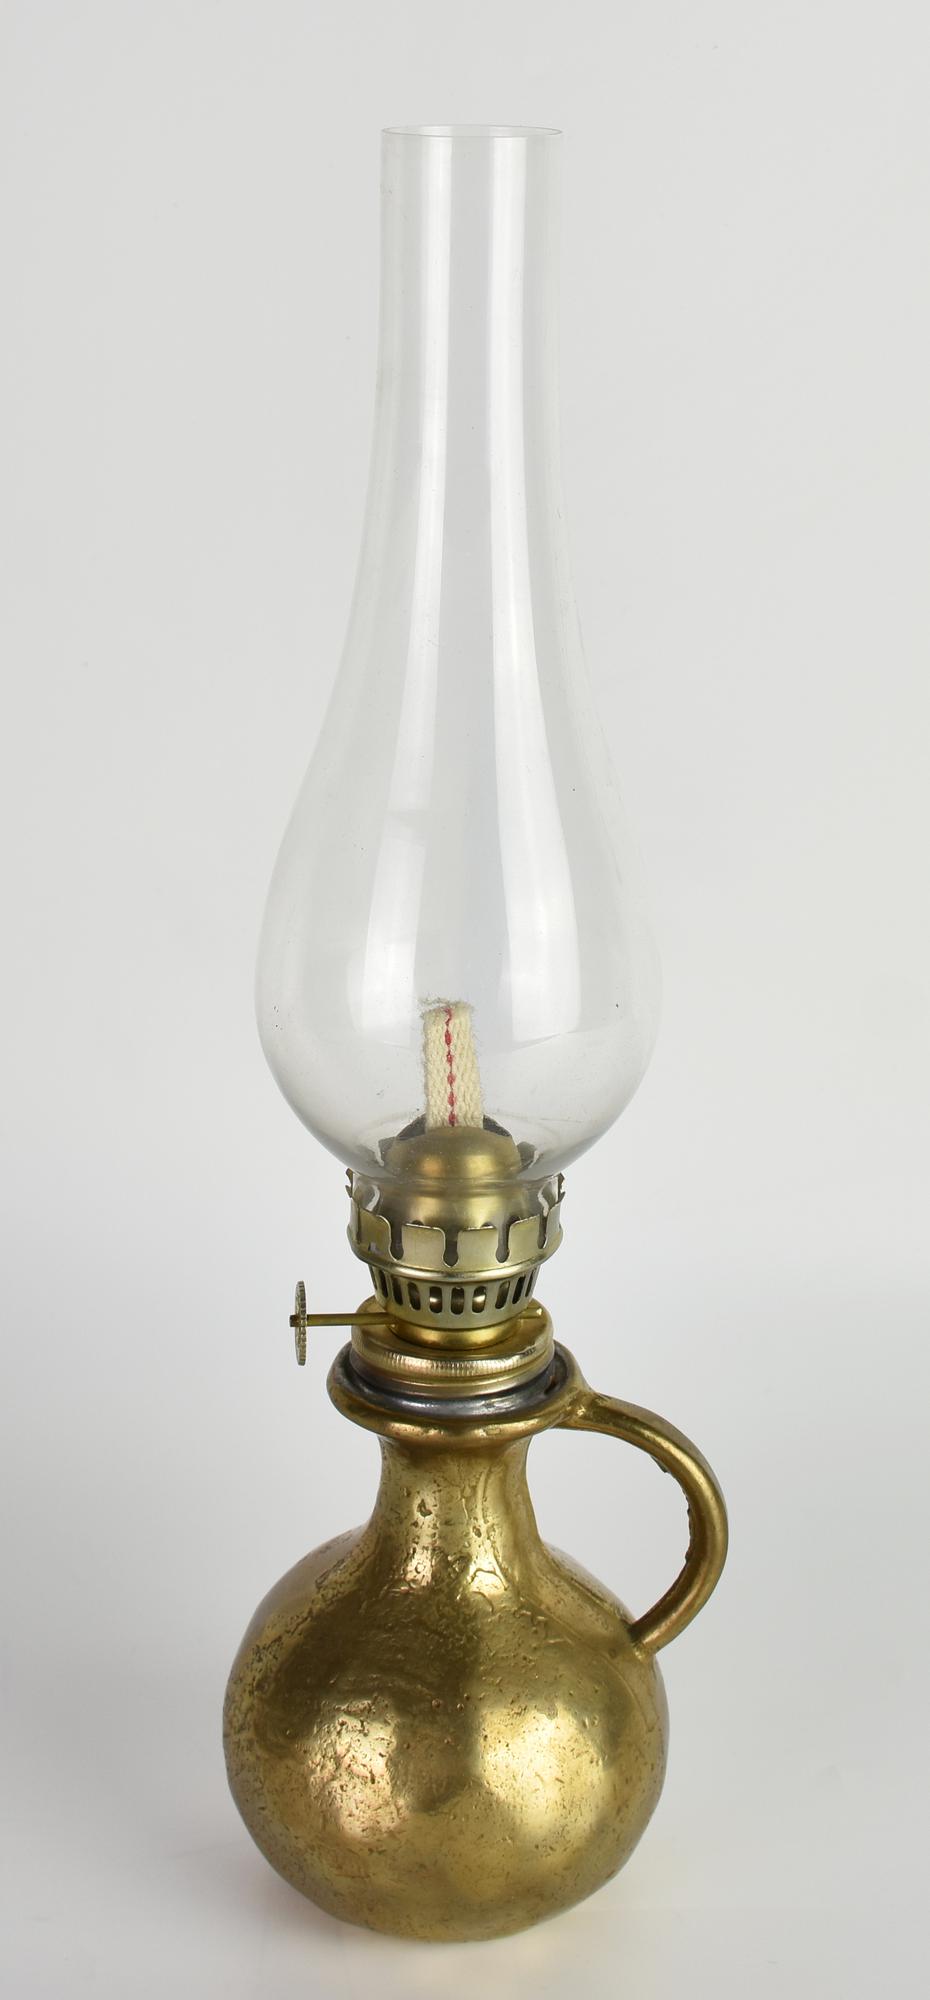 LAMPADA AD OLIO lampada ad olio in vetro e ottone, cm 33x7, diam cm 26  sulla, Livebid